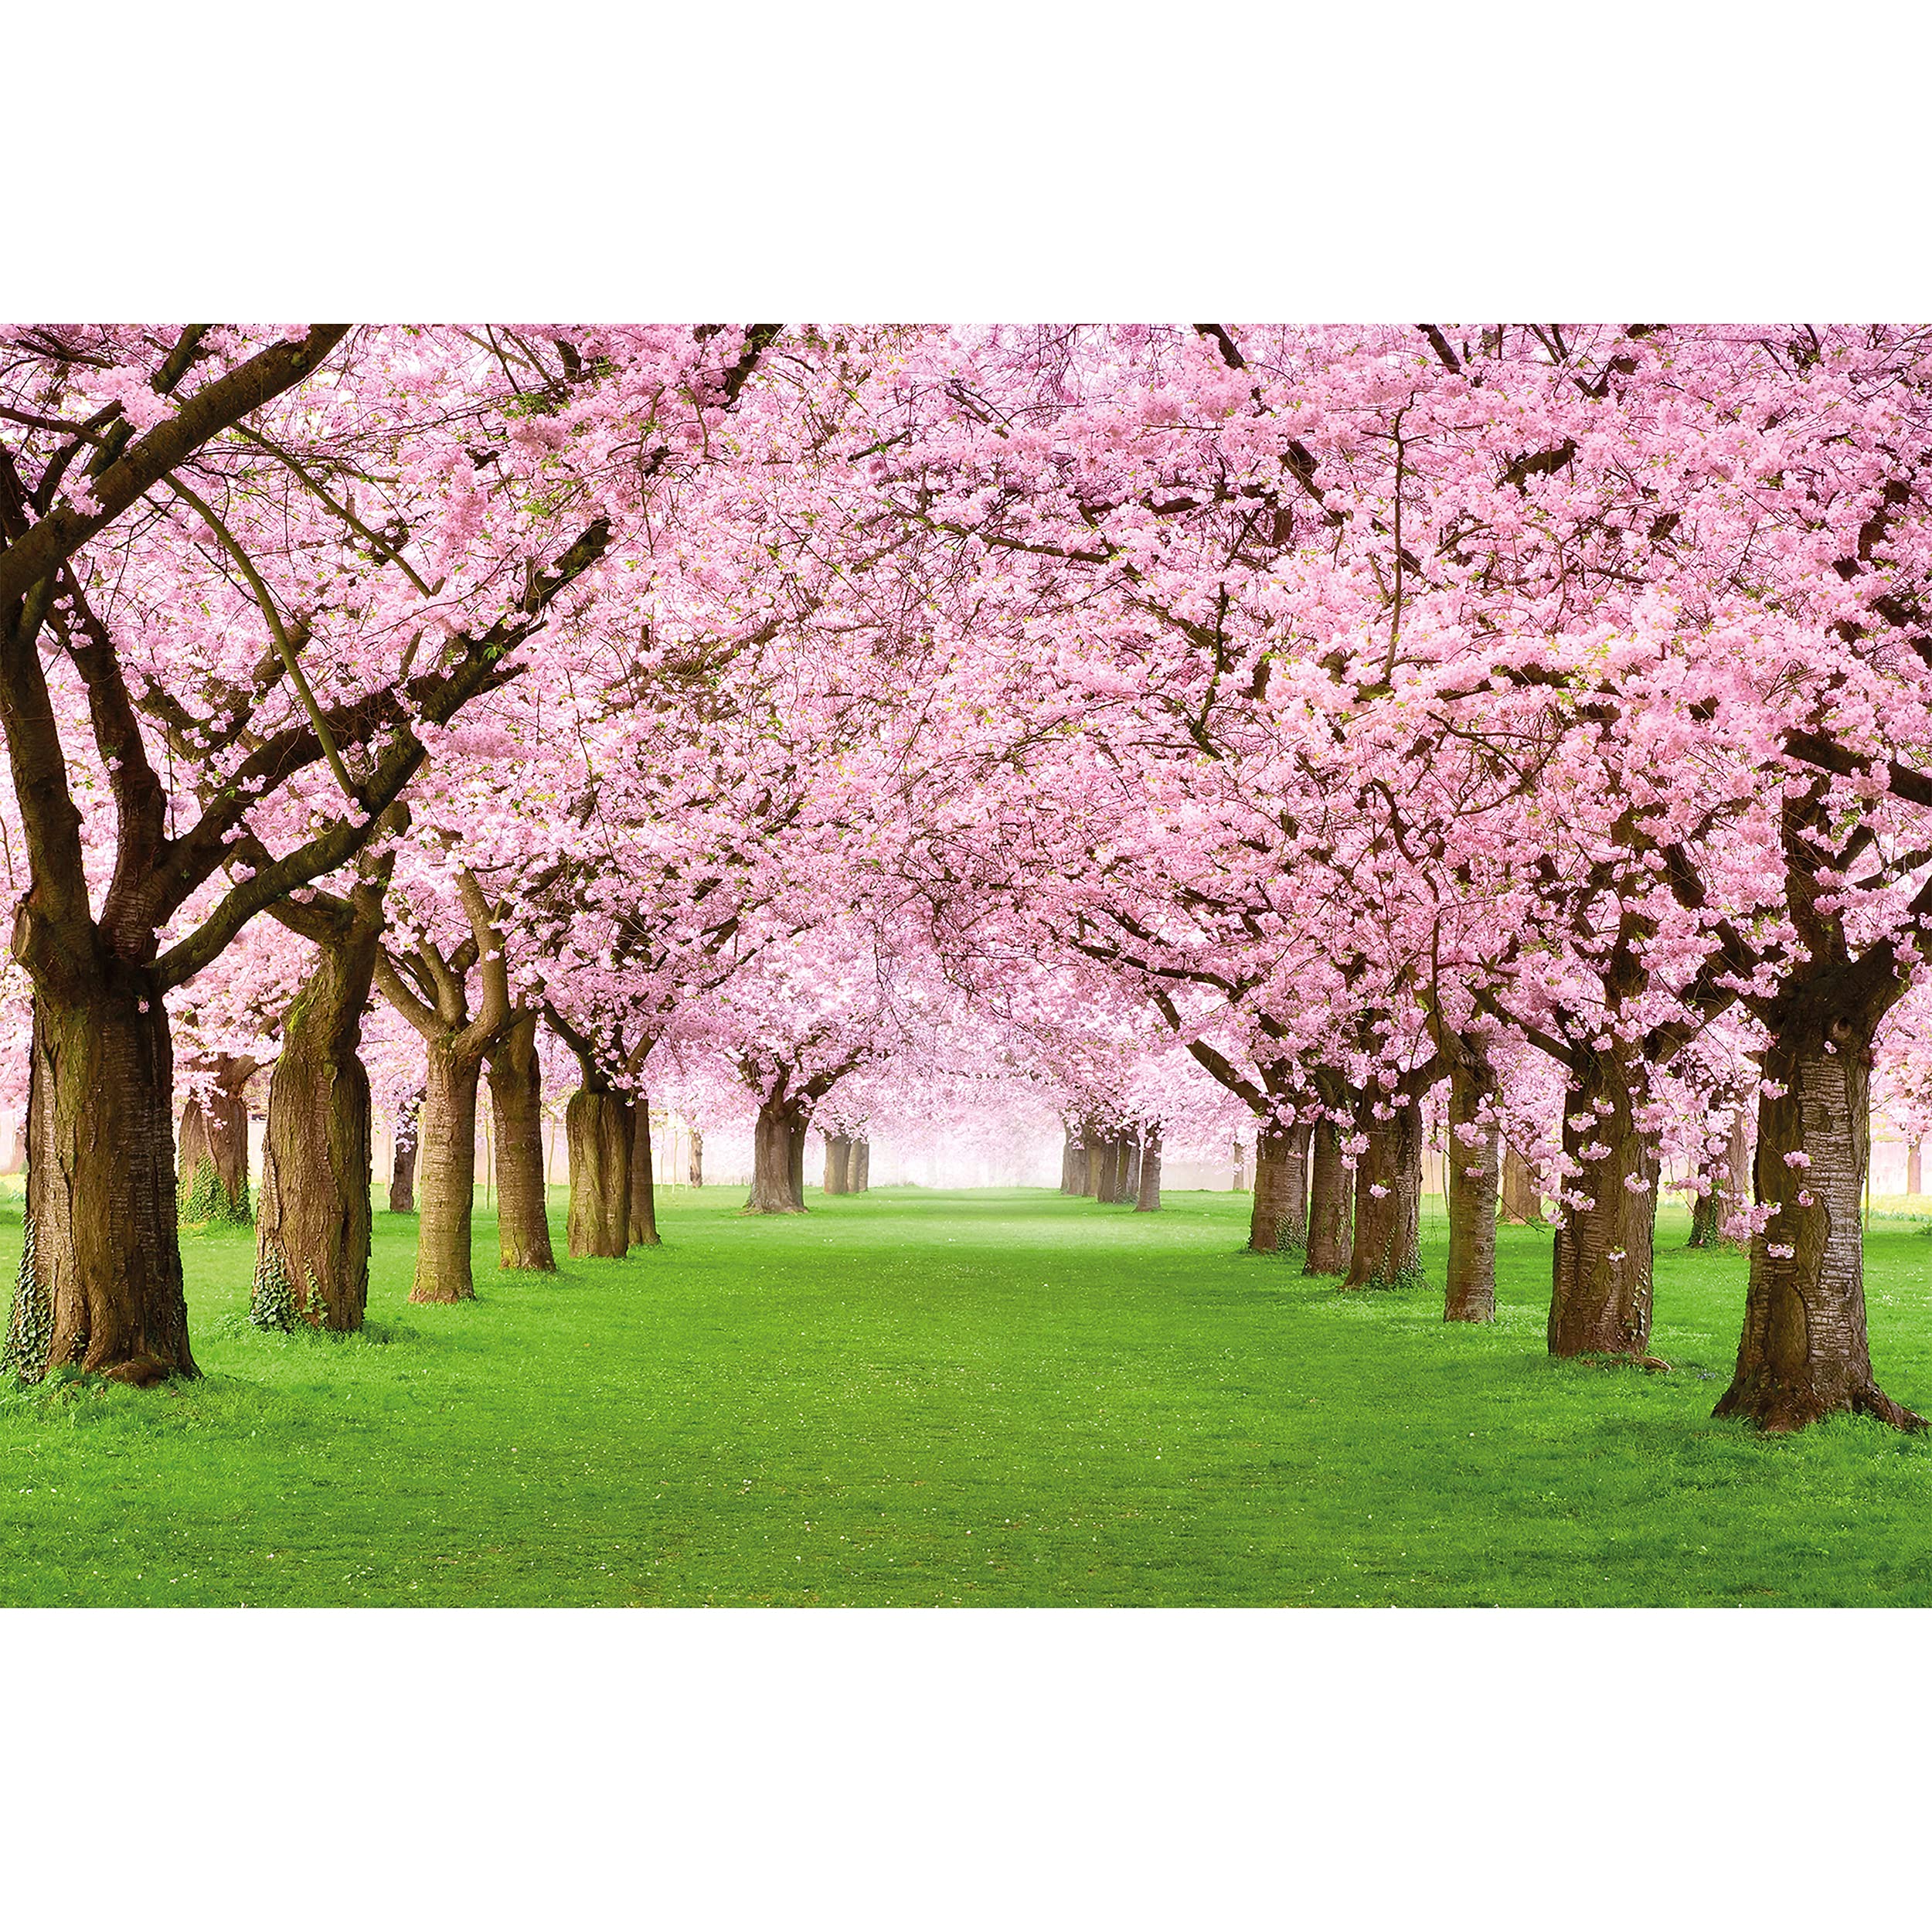 Large Photo Wallpaper – Cherry Blossom Tree – Picture Decorative Spring Landscape Avenue Cherry Blossoms Sakura Bloom Flowers Image Decor Wall Mura...